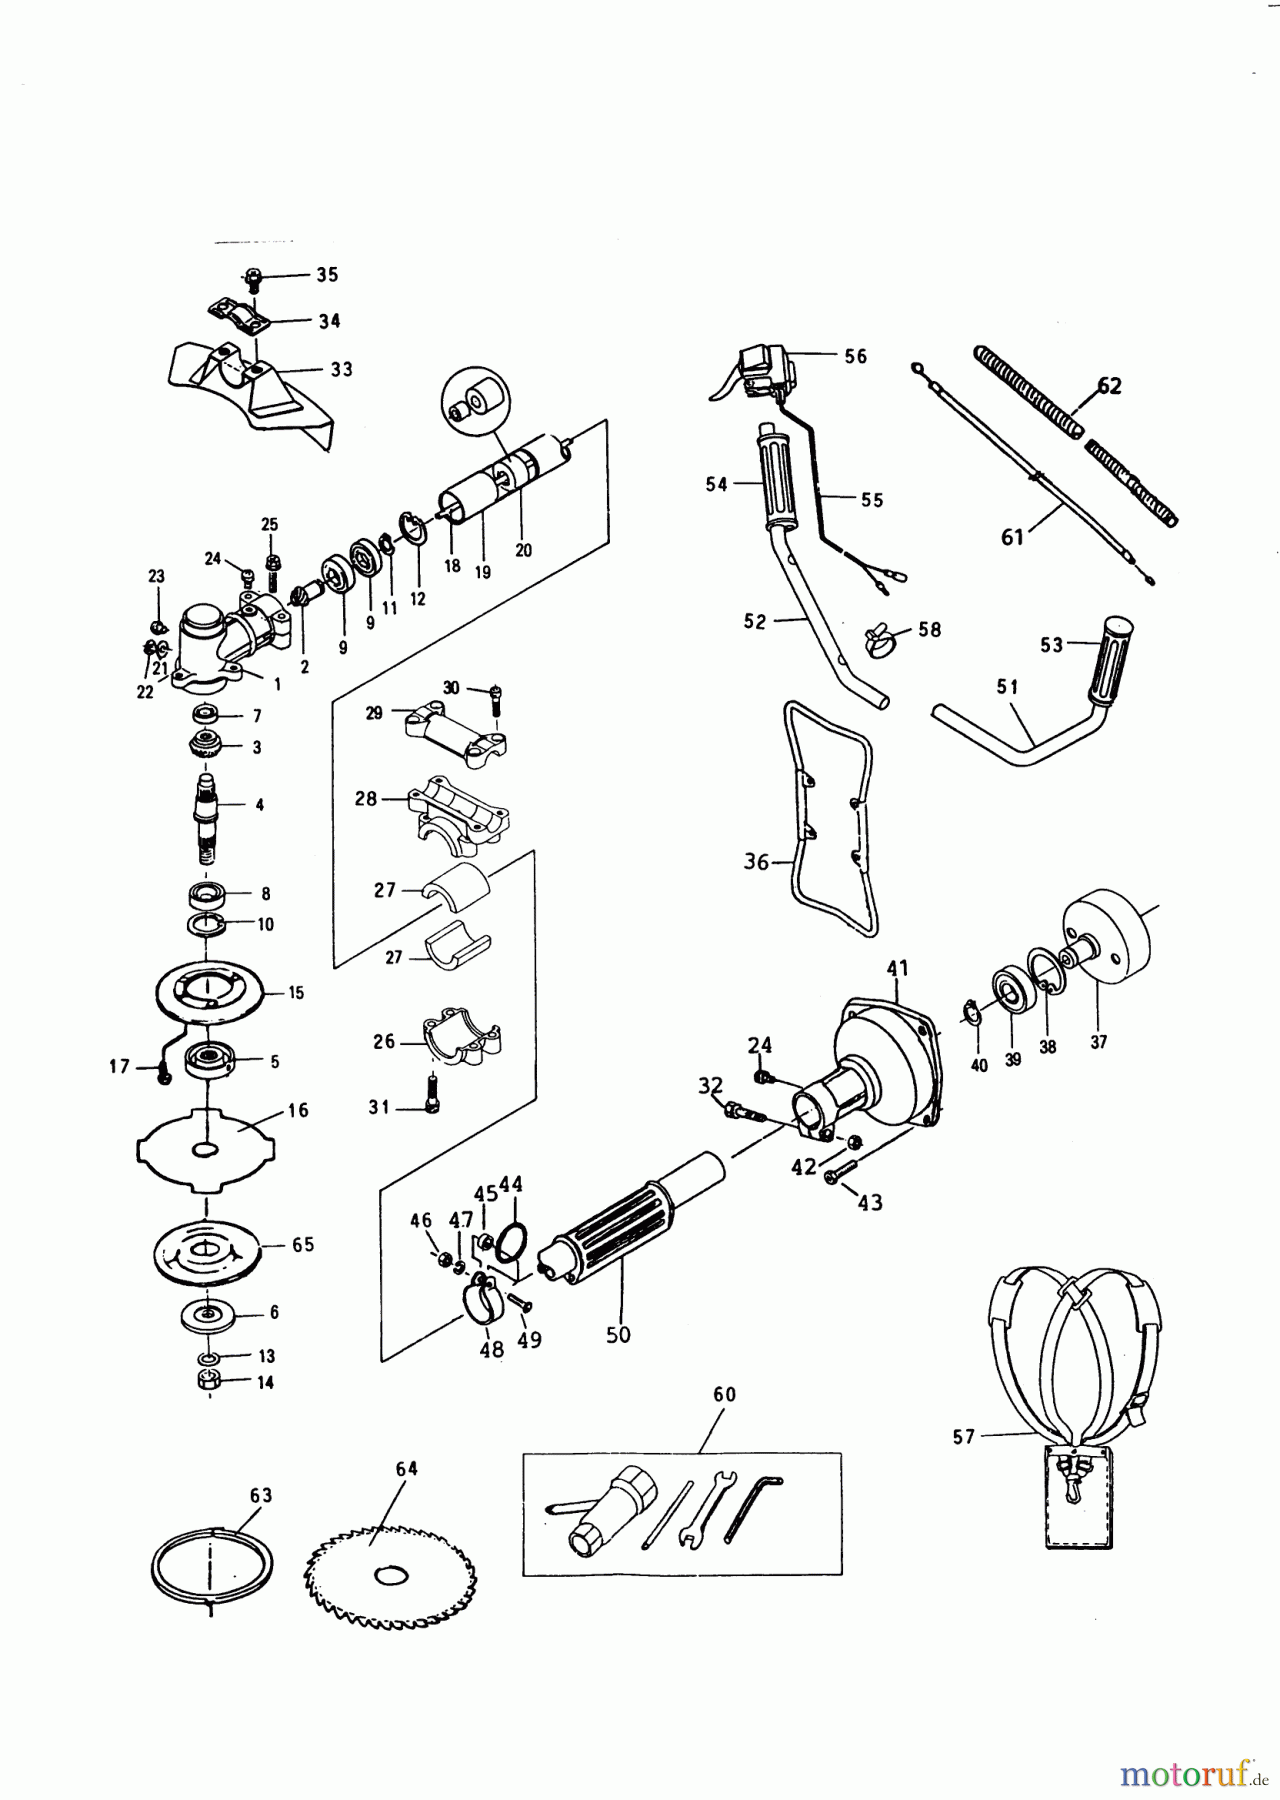  AL-KO Gartentechnik Motorsensen MS 400  00/0 Seite 1